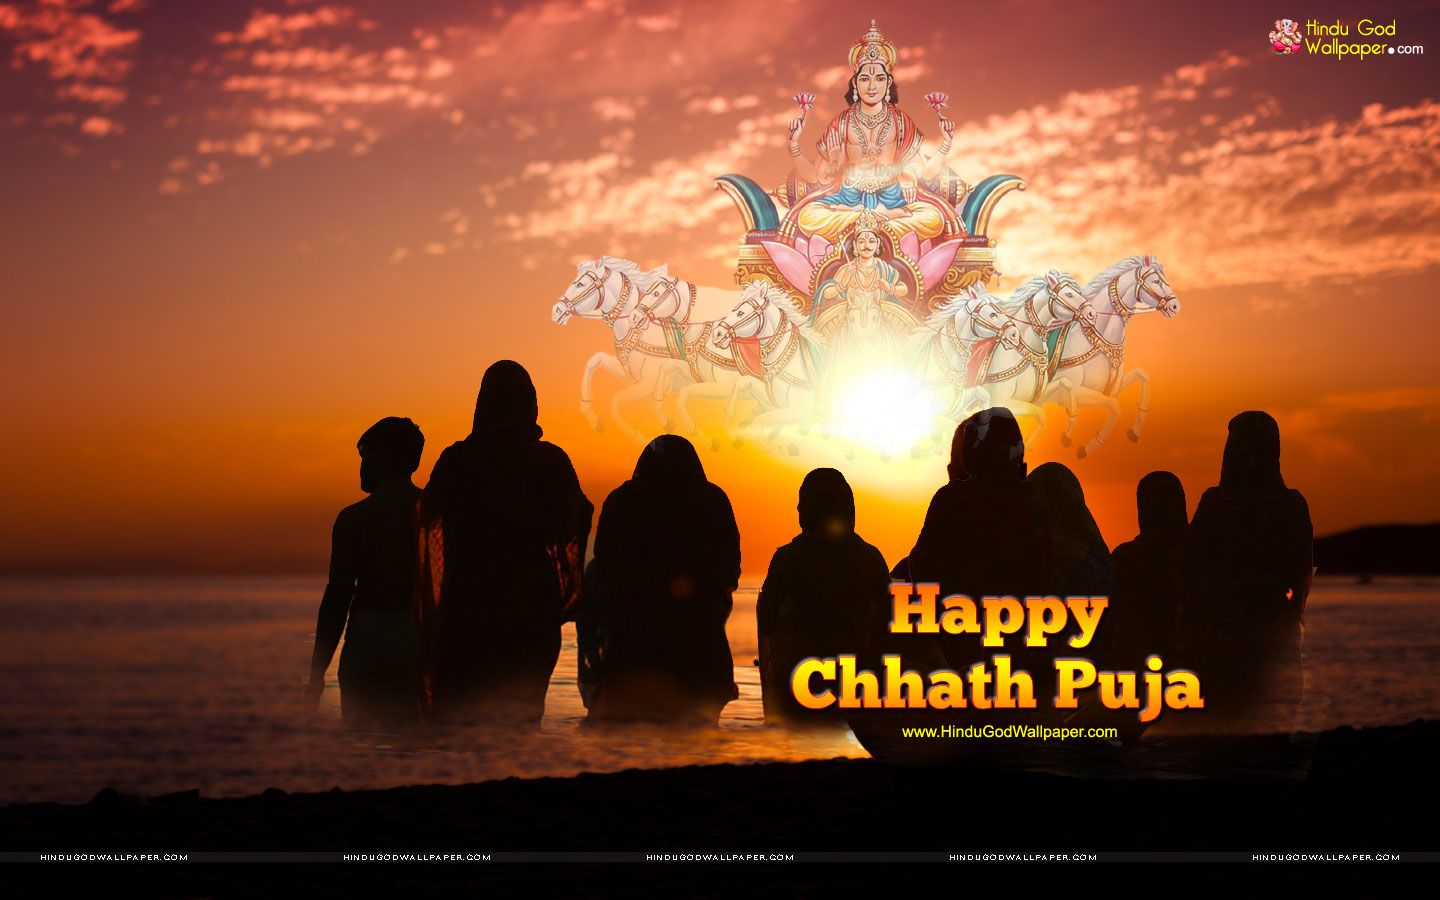 Wallpaper S Ideas Happy Chhath Puja